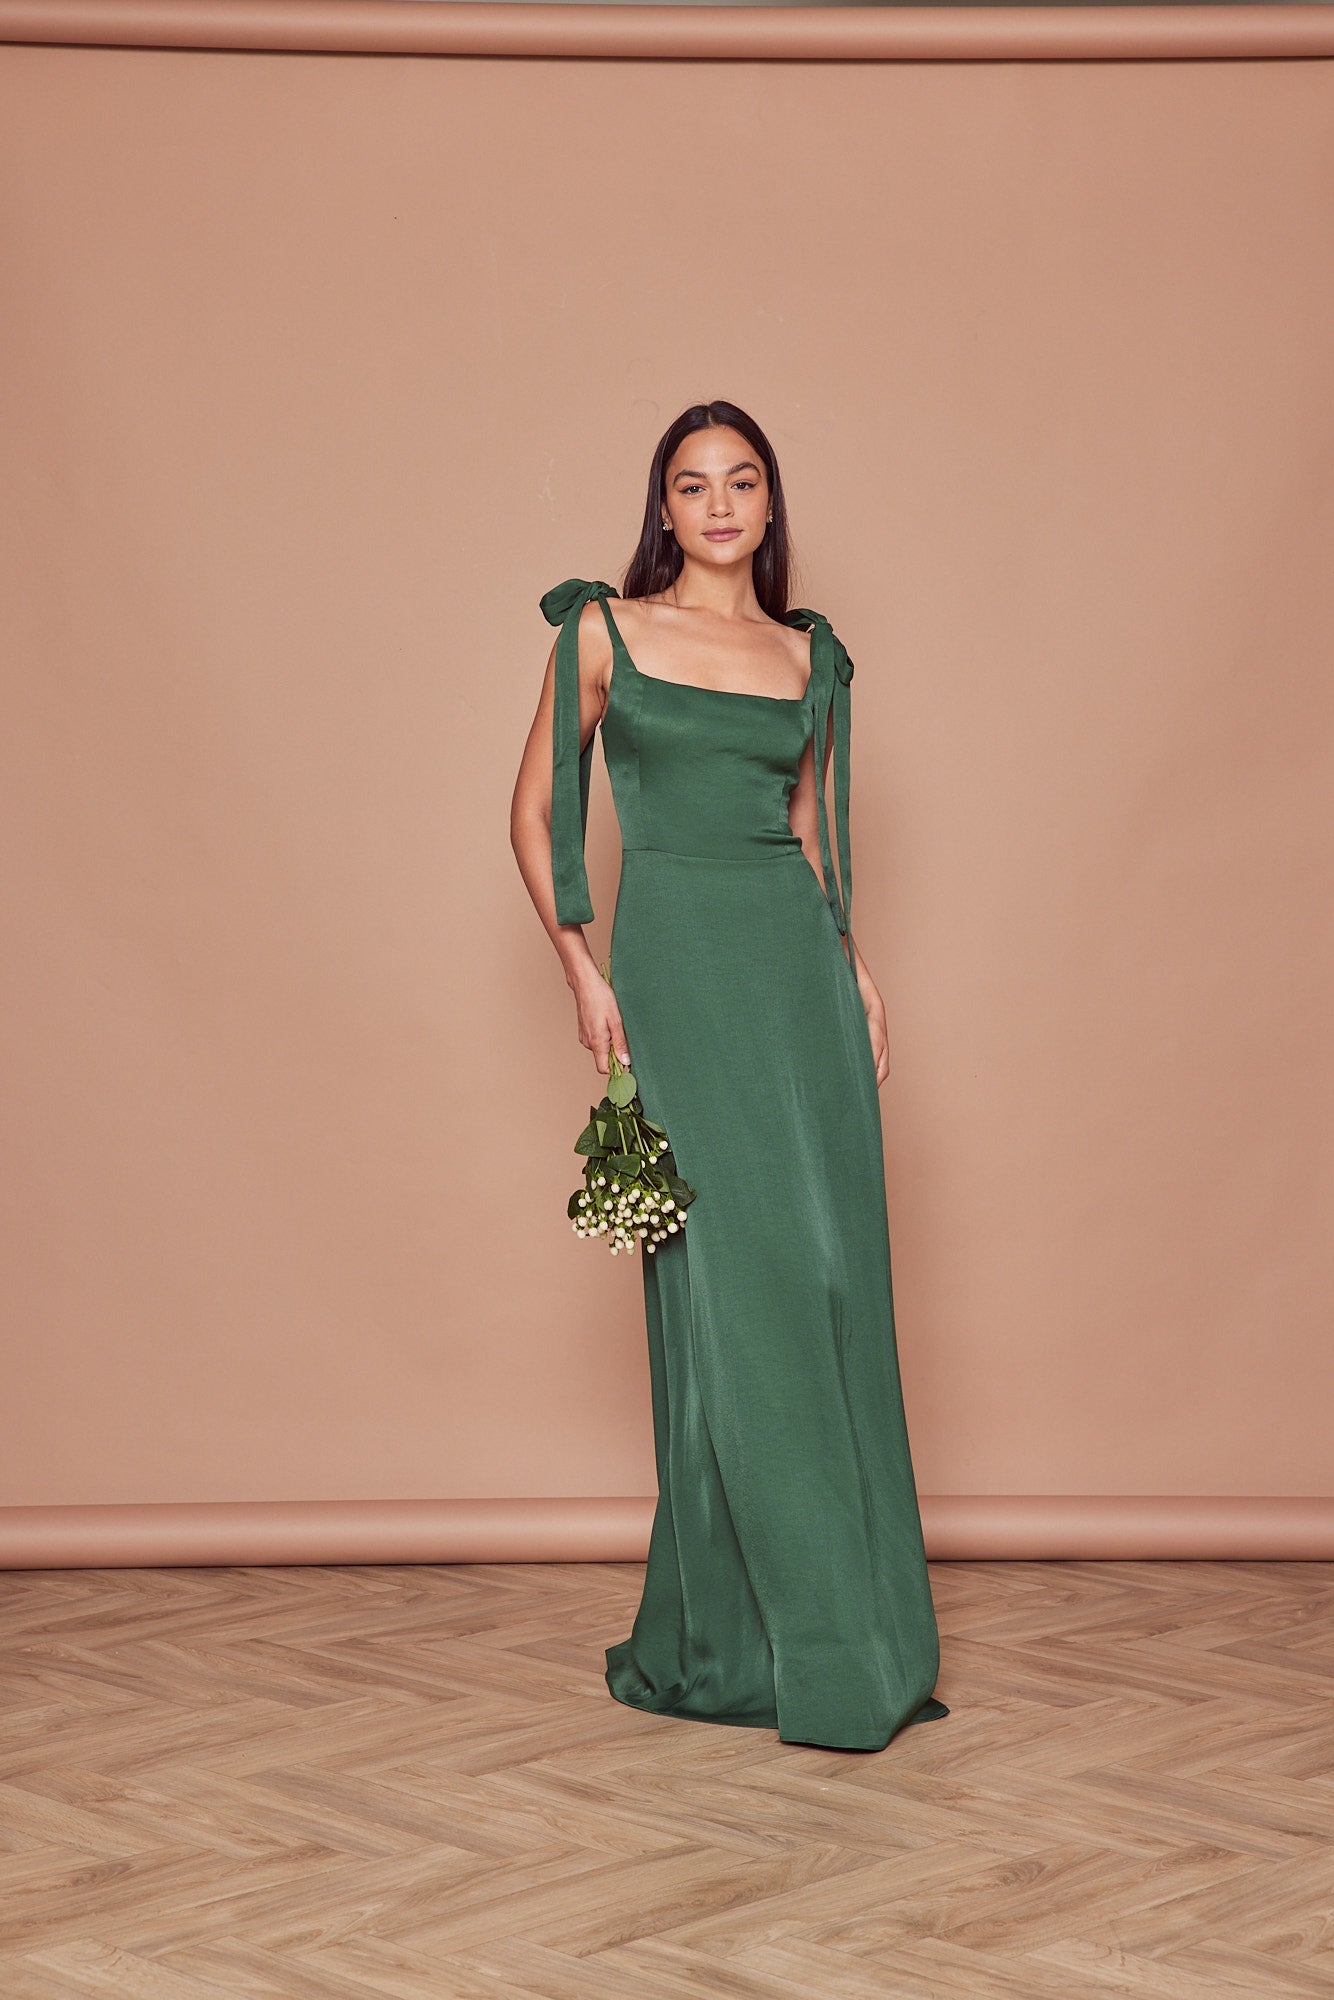 Allegra Satin Tie Shoulder Dress - Forest Green - Maids to Measure